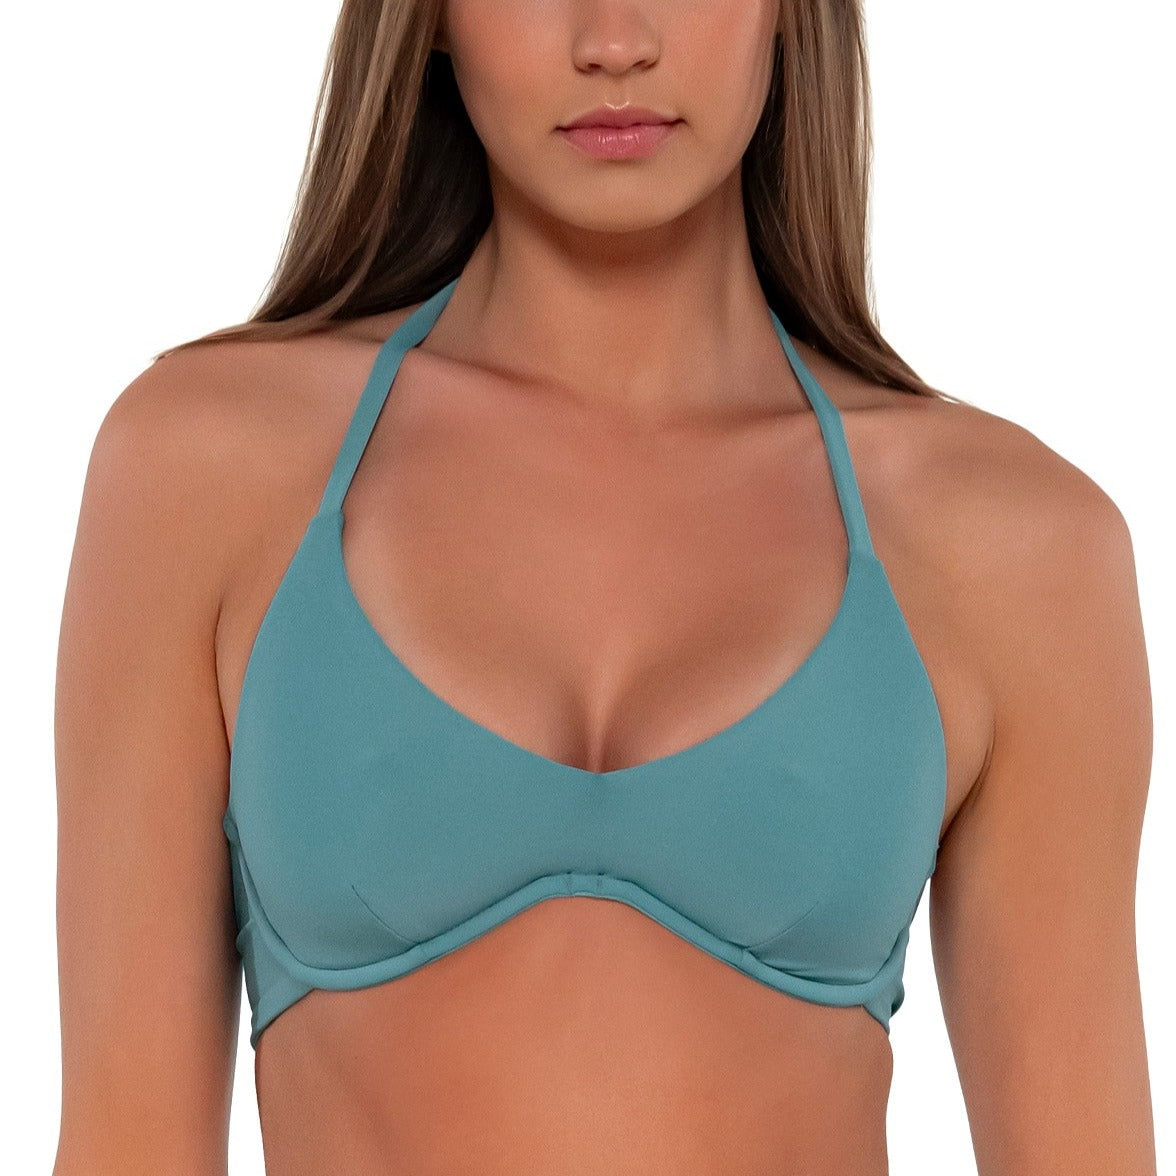 Brooke U-Wire Bikini Top -  643T - Ocean Swim - Tops - Bikinis Sunsets, Inc.   